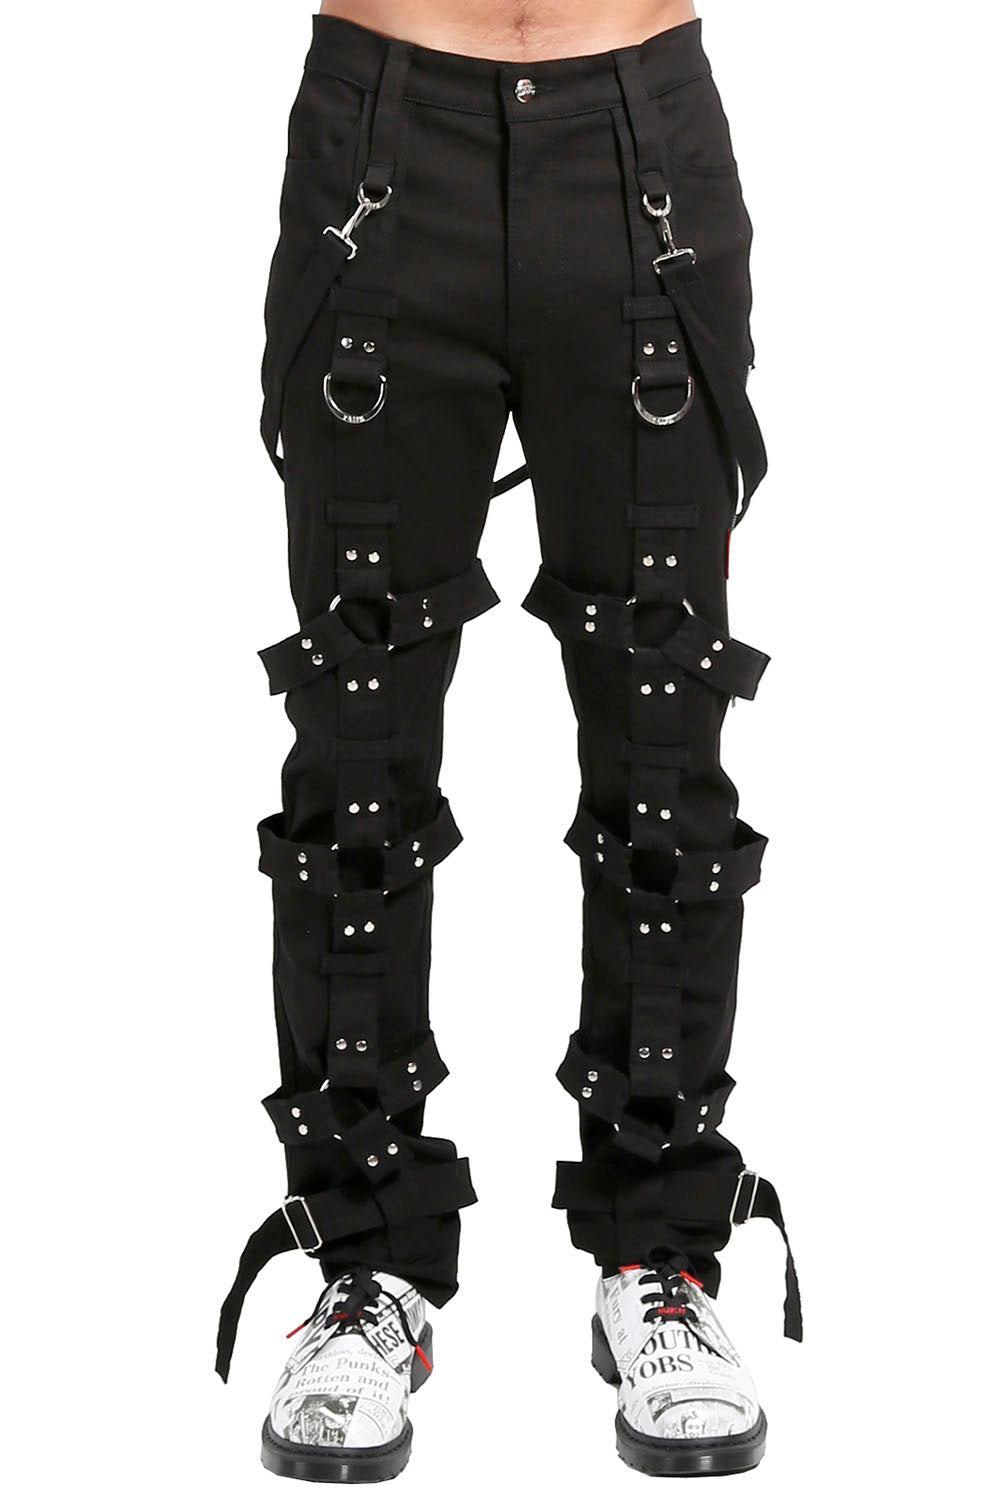 NEW Hottopic black tripp pants size 1 goth punk skater